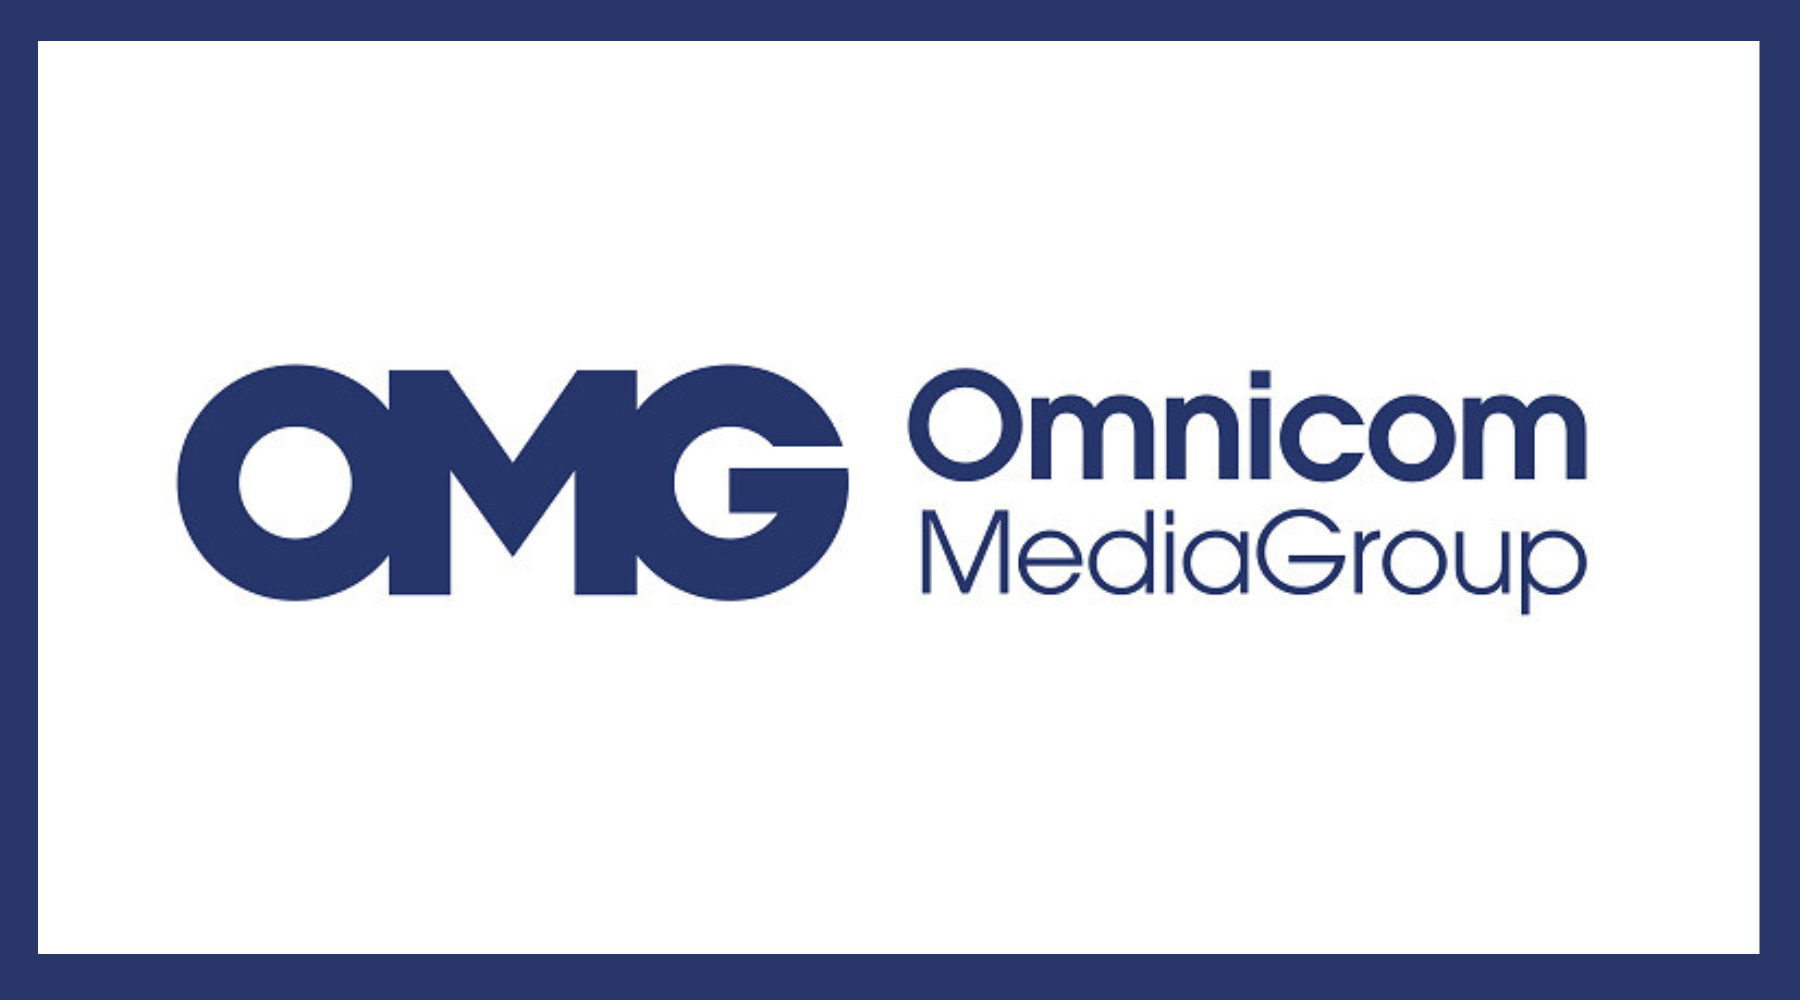 Forrester Agency Assessment Names OMG as "Leader" Among Other Media Groups